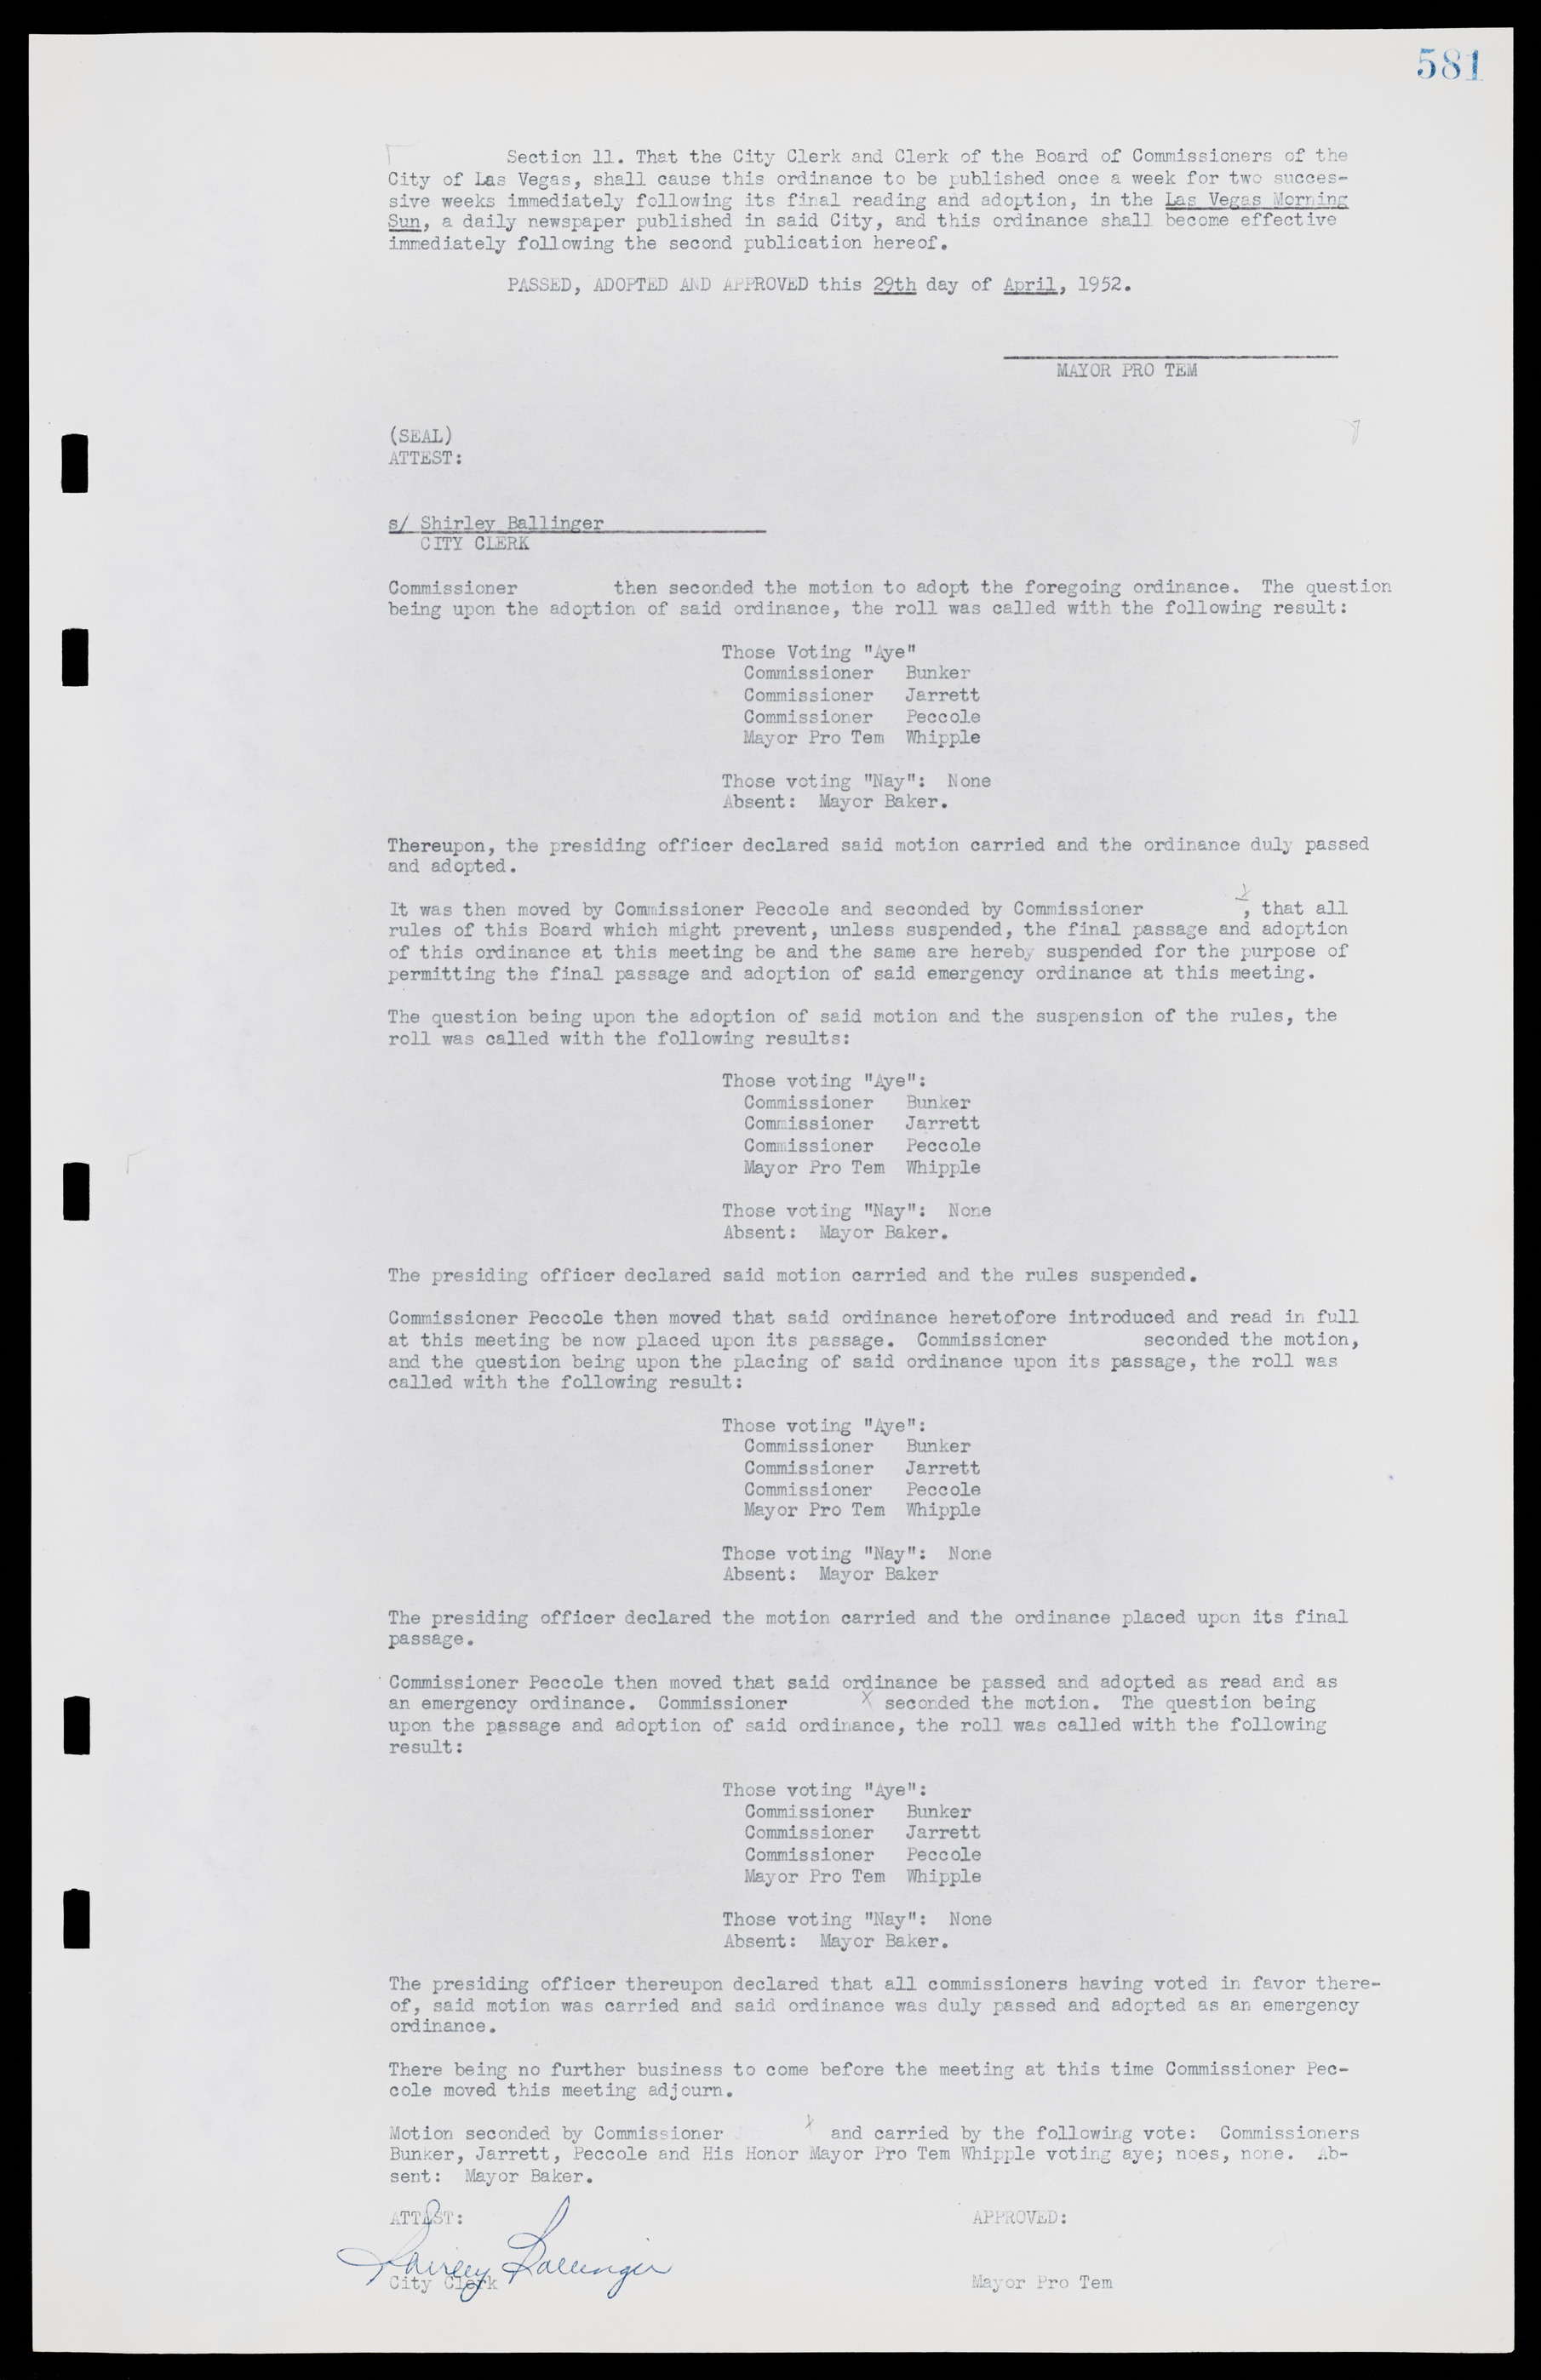 Las Vegas City Commission Minutes, November 7, 1949 to May 21, 1952, lvc000007-599